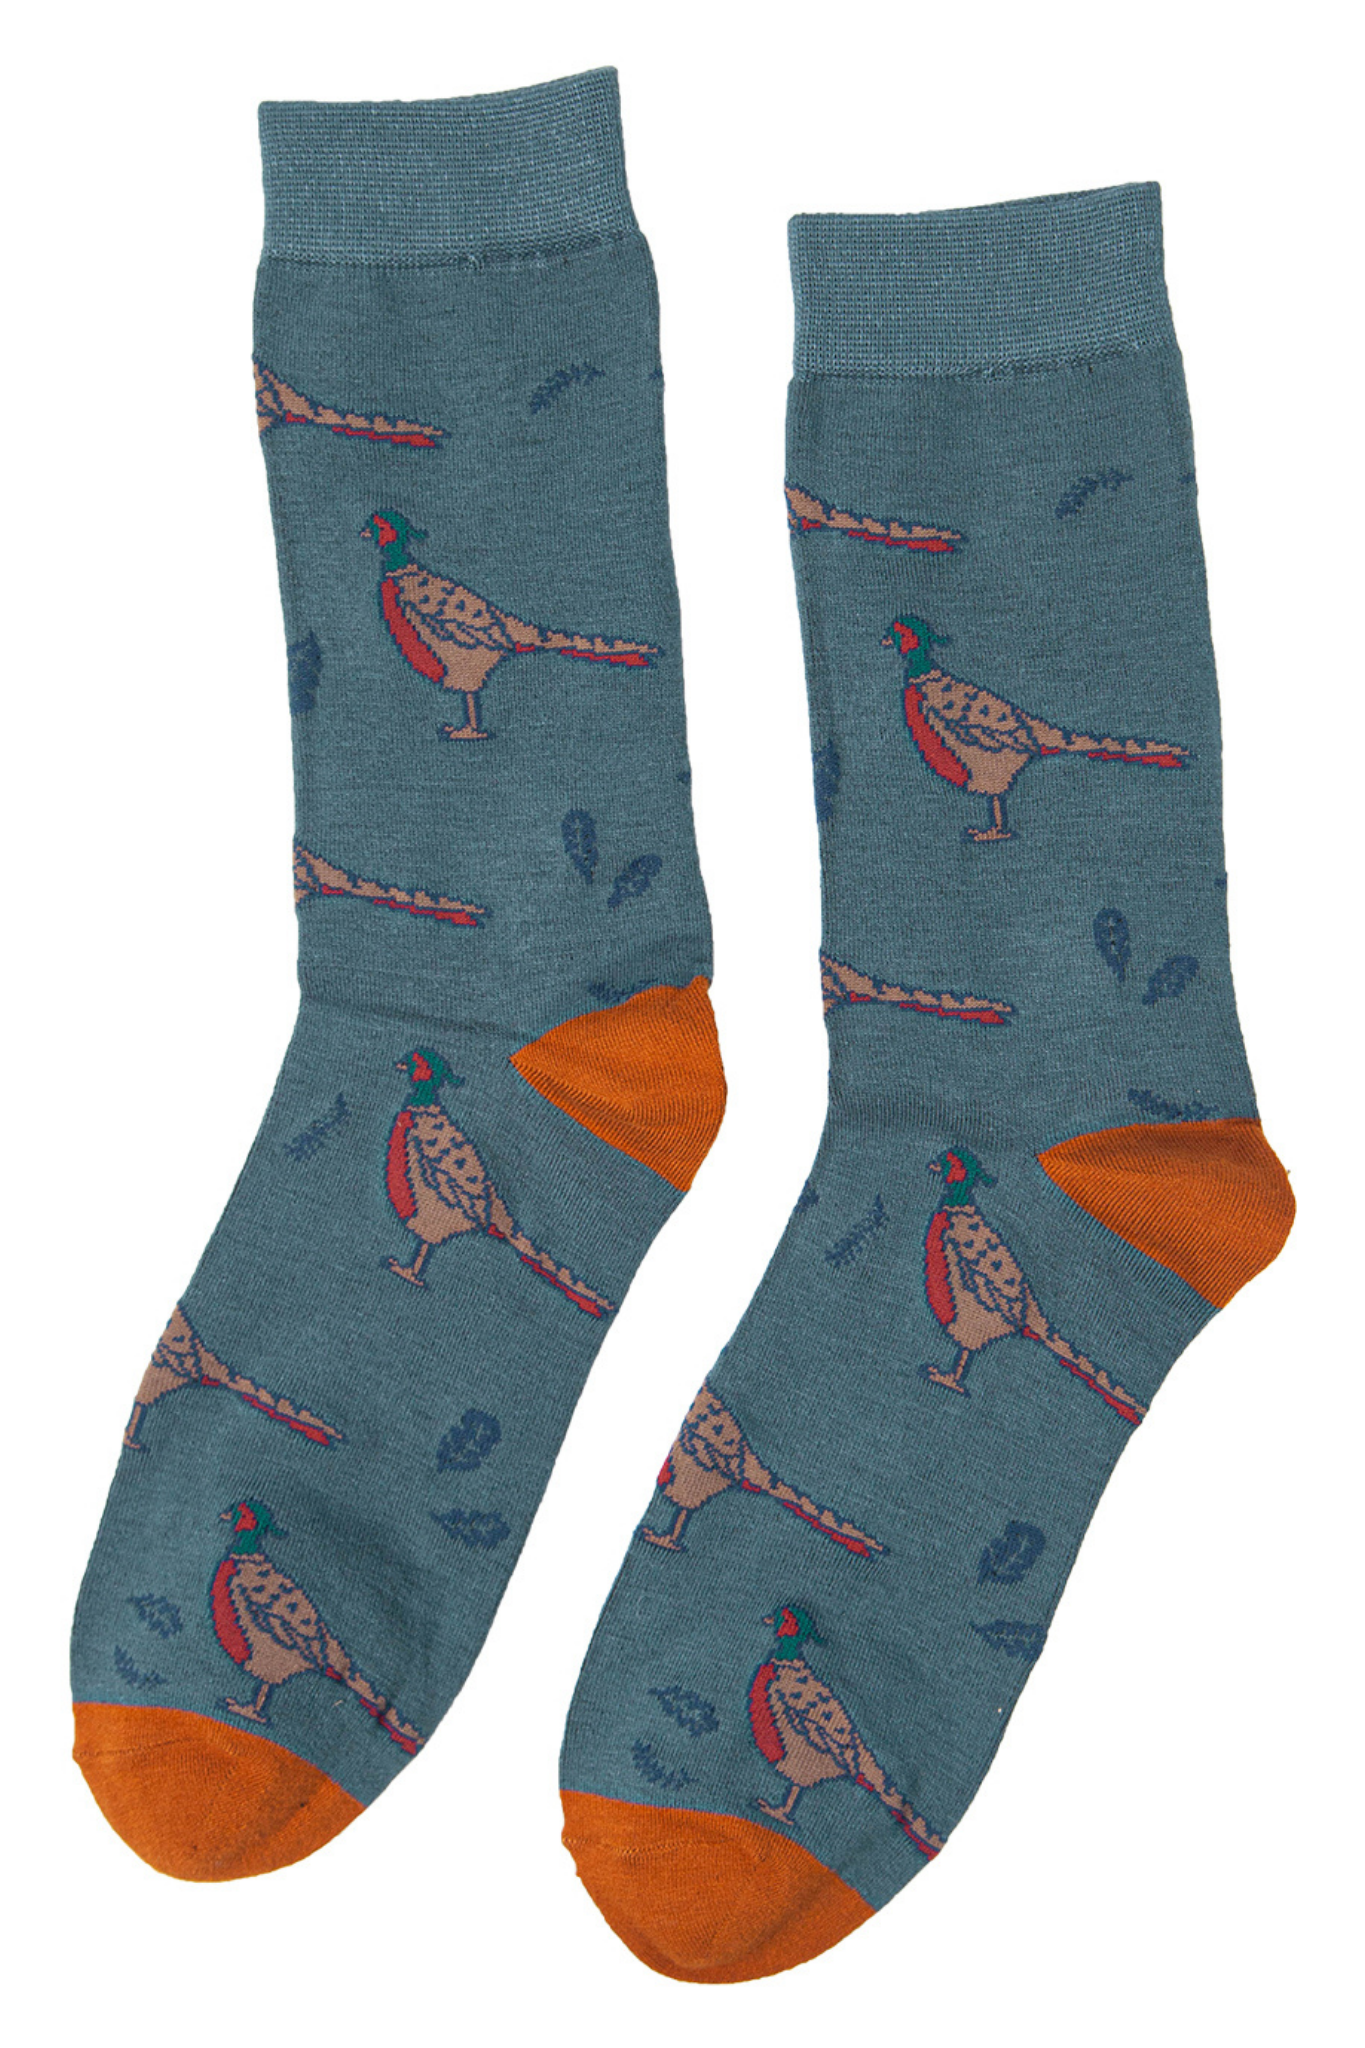 pheasant bird pattern novelty dress socks in teal blue